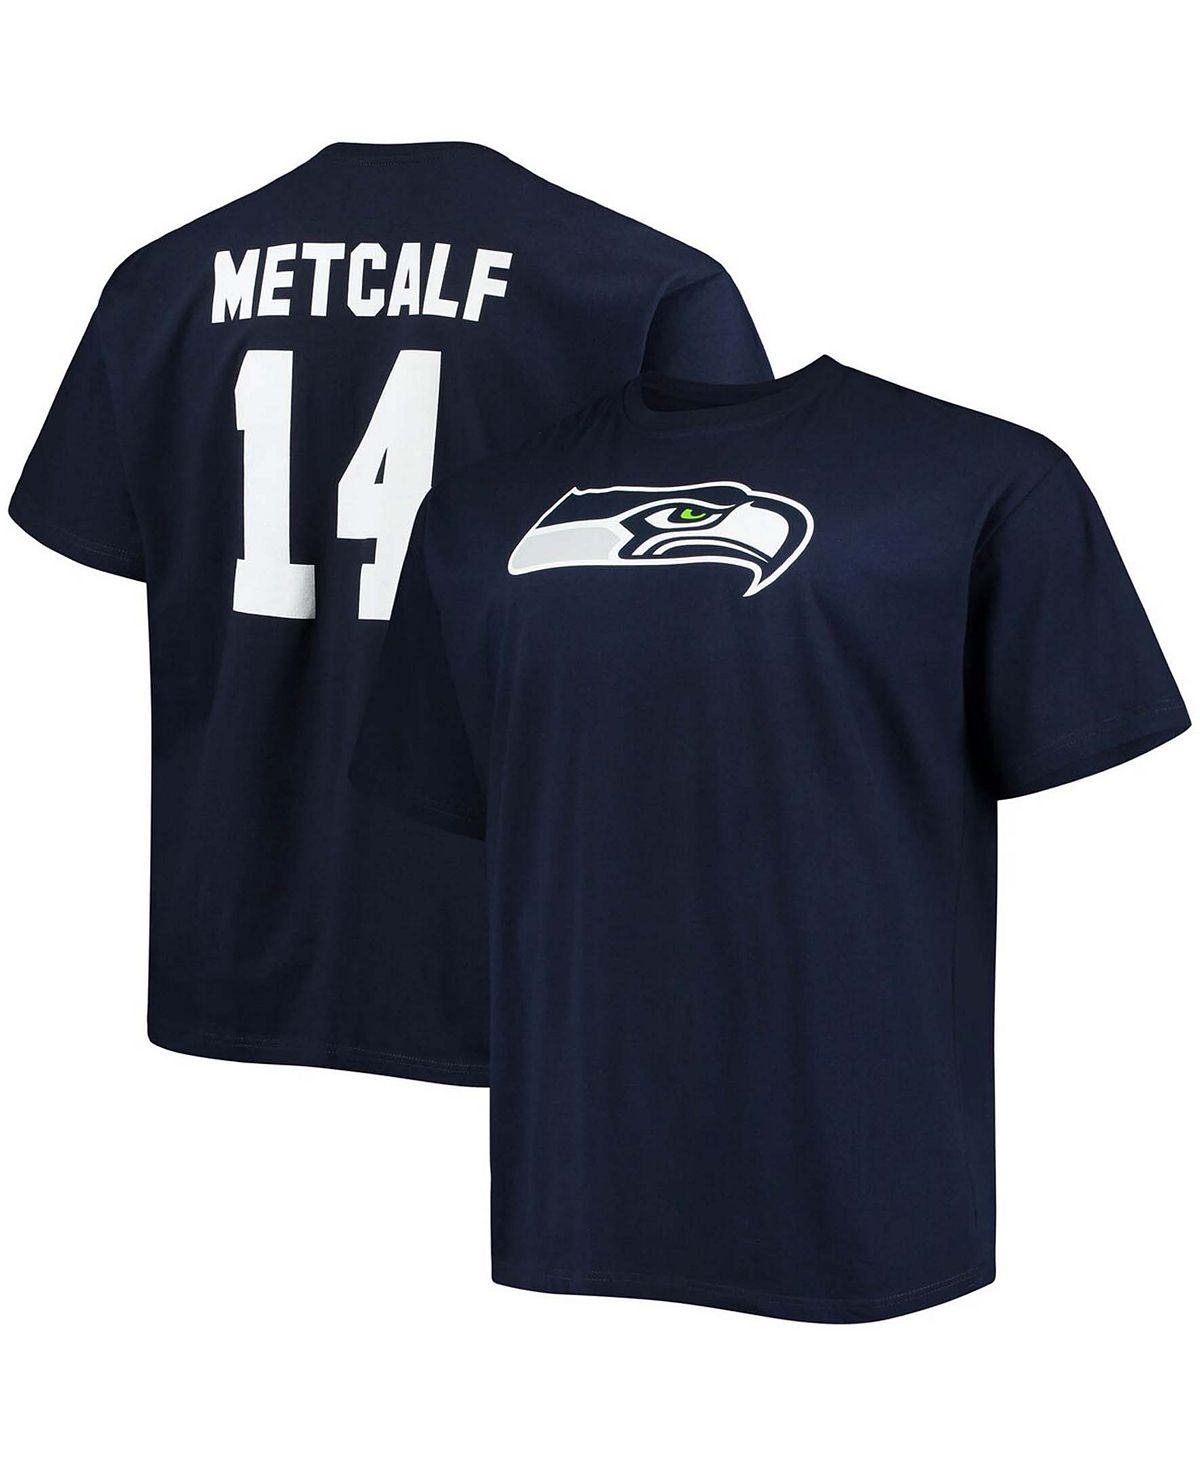 Мужская футболка Big and Tall DK Metcalf College Navy Seattle Seahawks с именем игрока и номером Fanatics